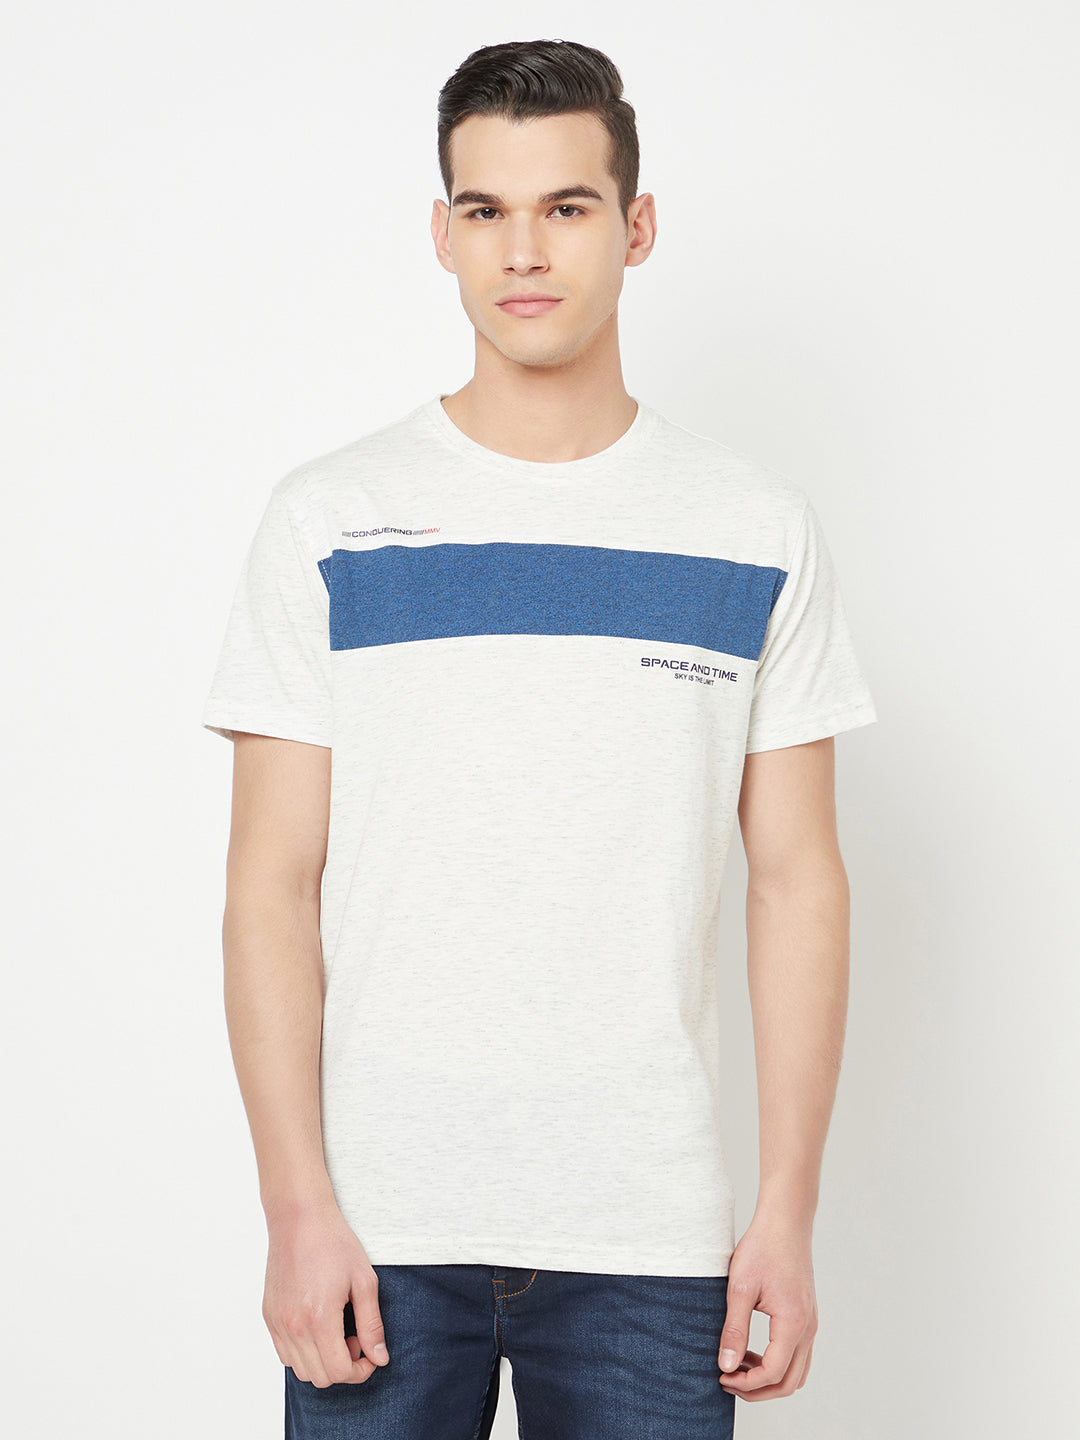 White Colourblocked Round Neck T-Shirt - Men T-Shirts